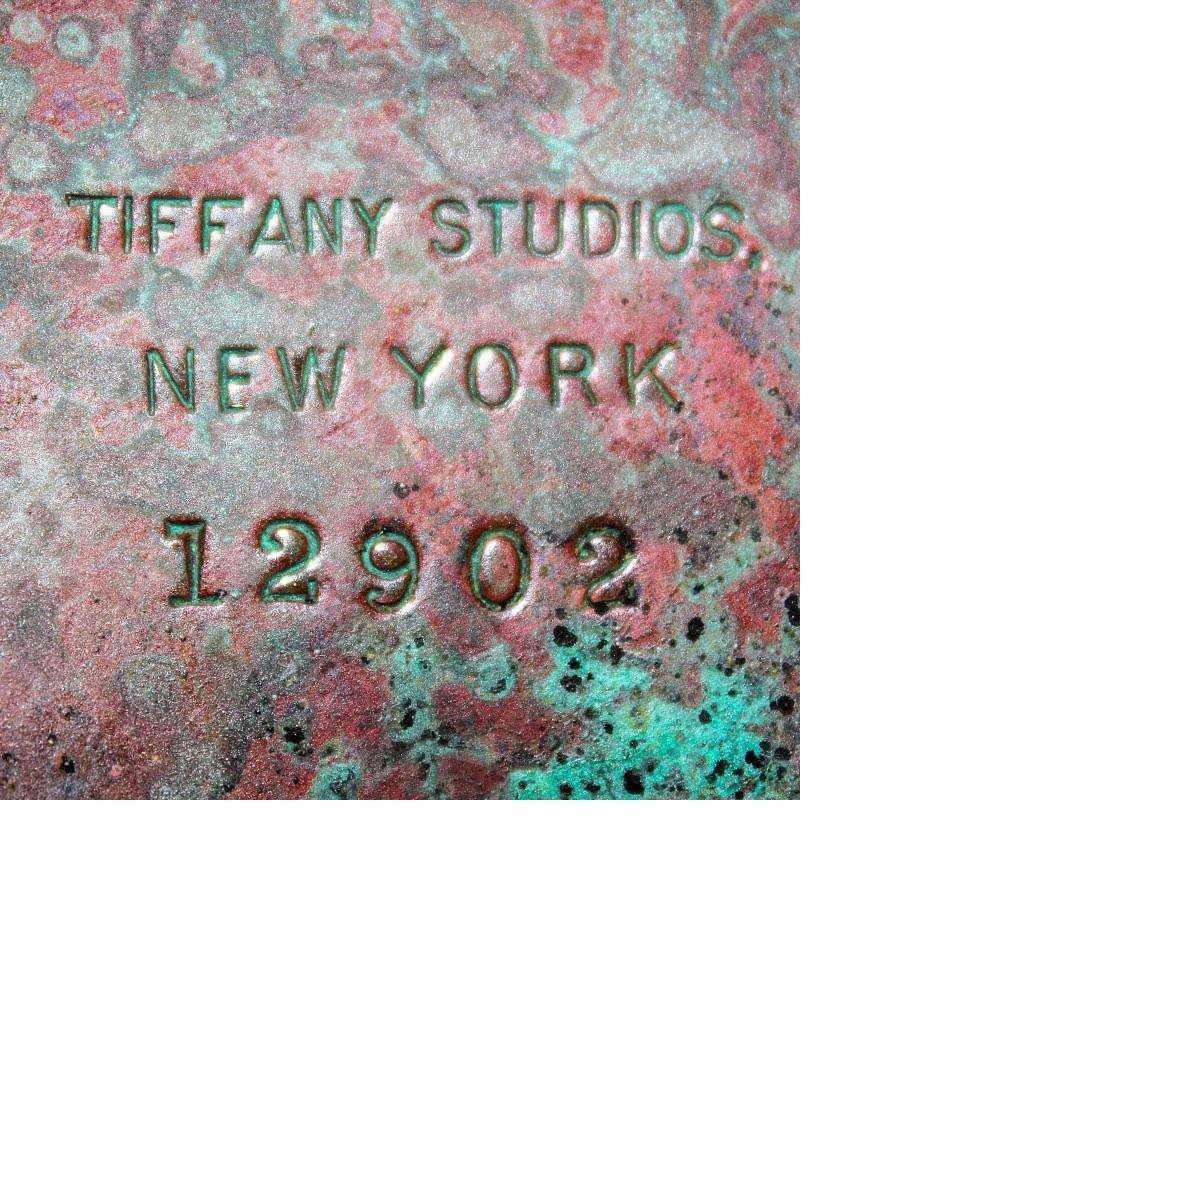 Patinated Tiffany Studios New York 